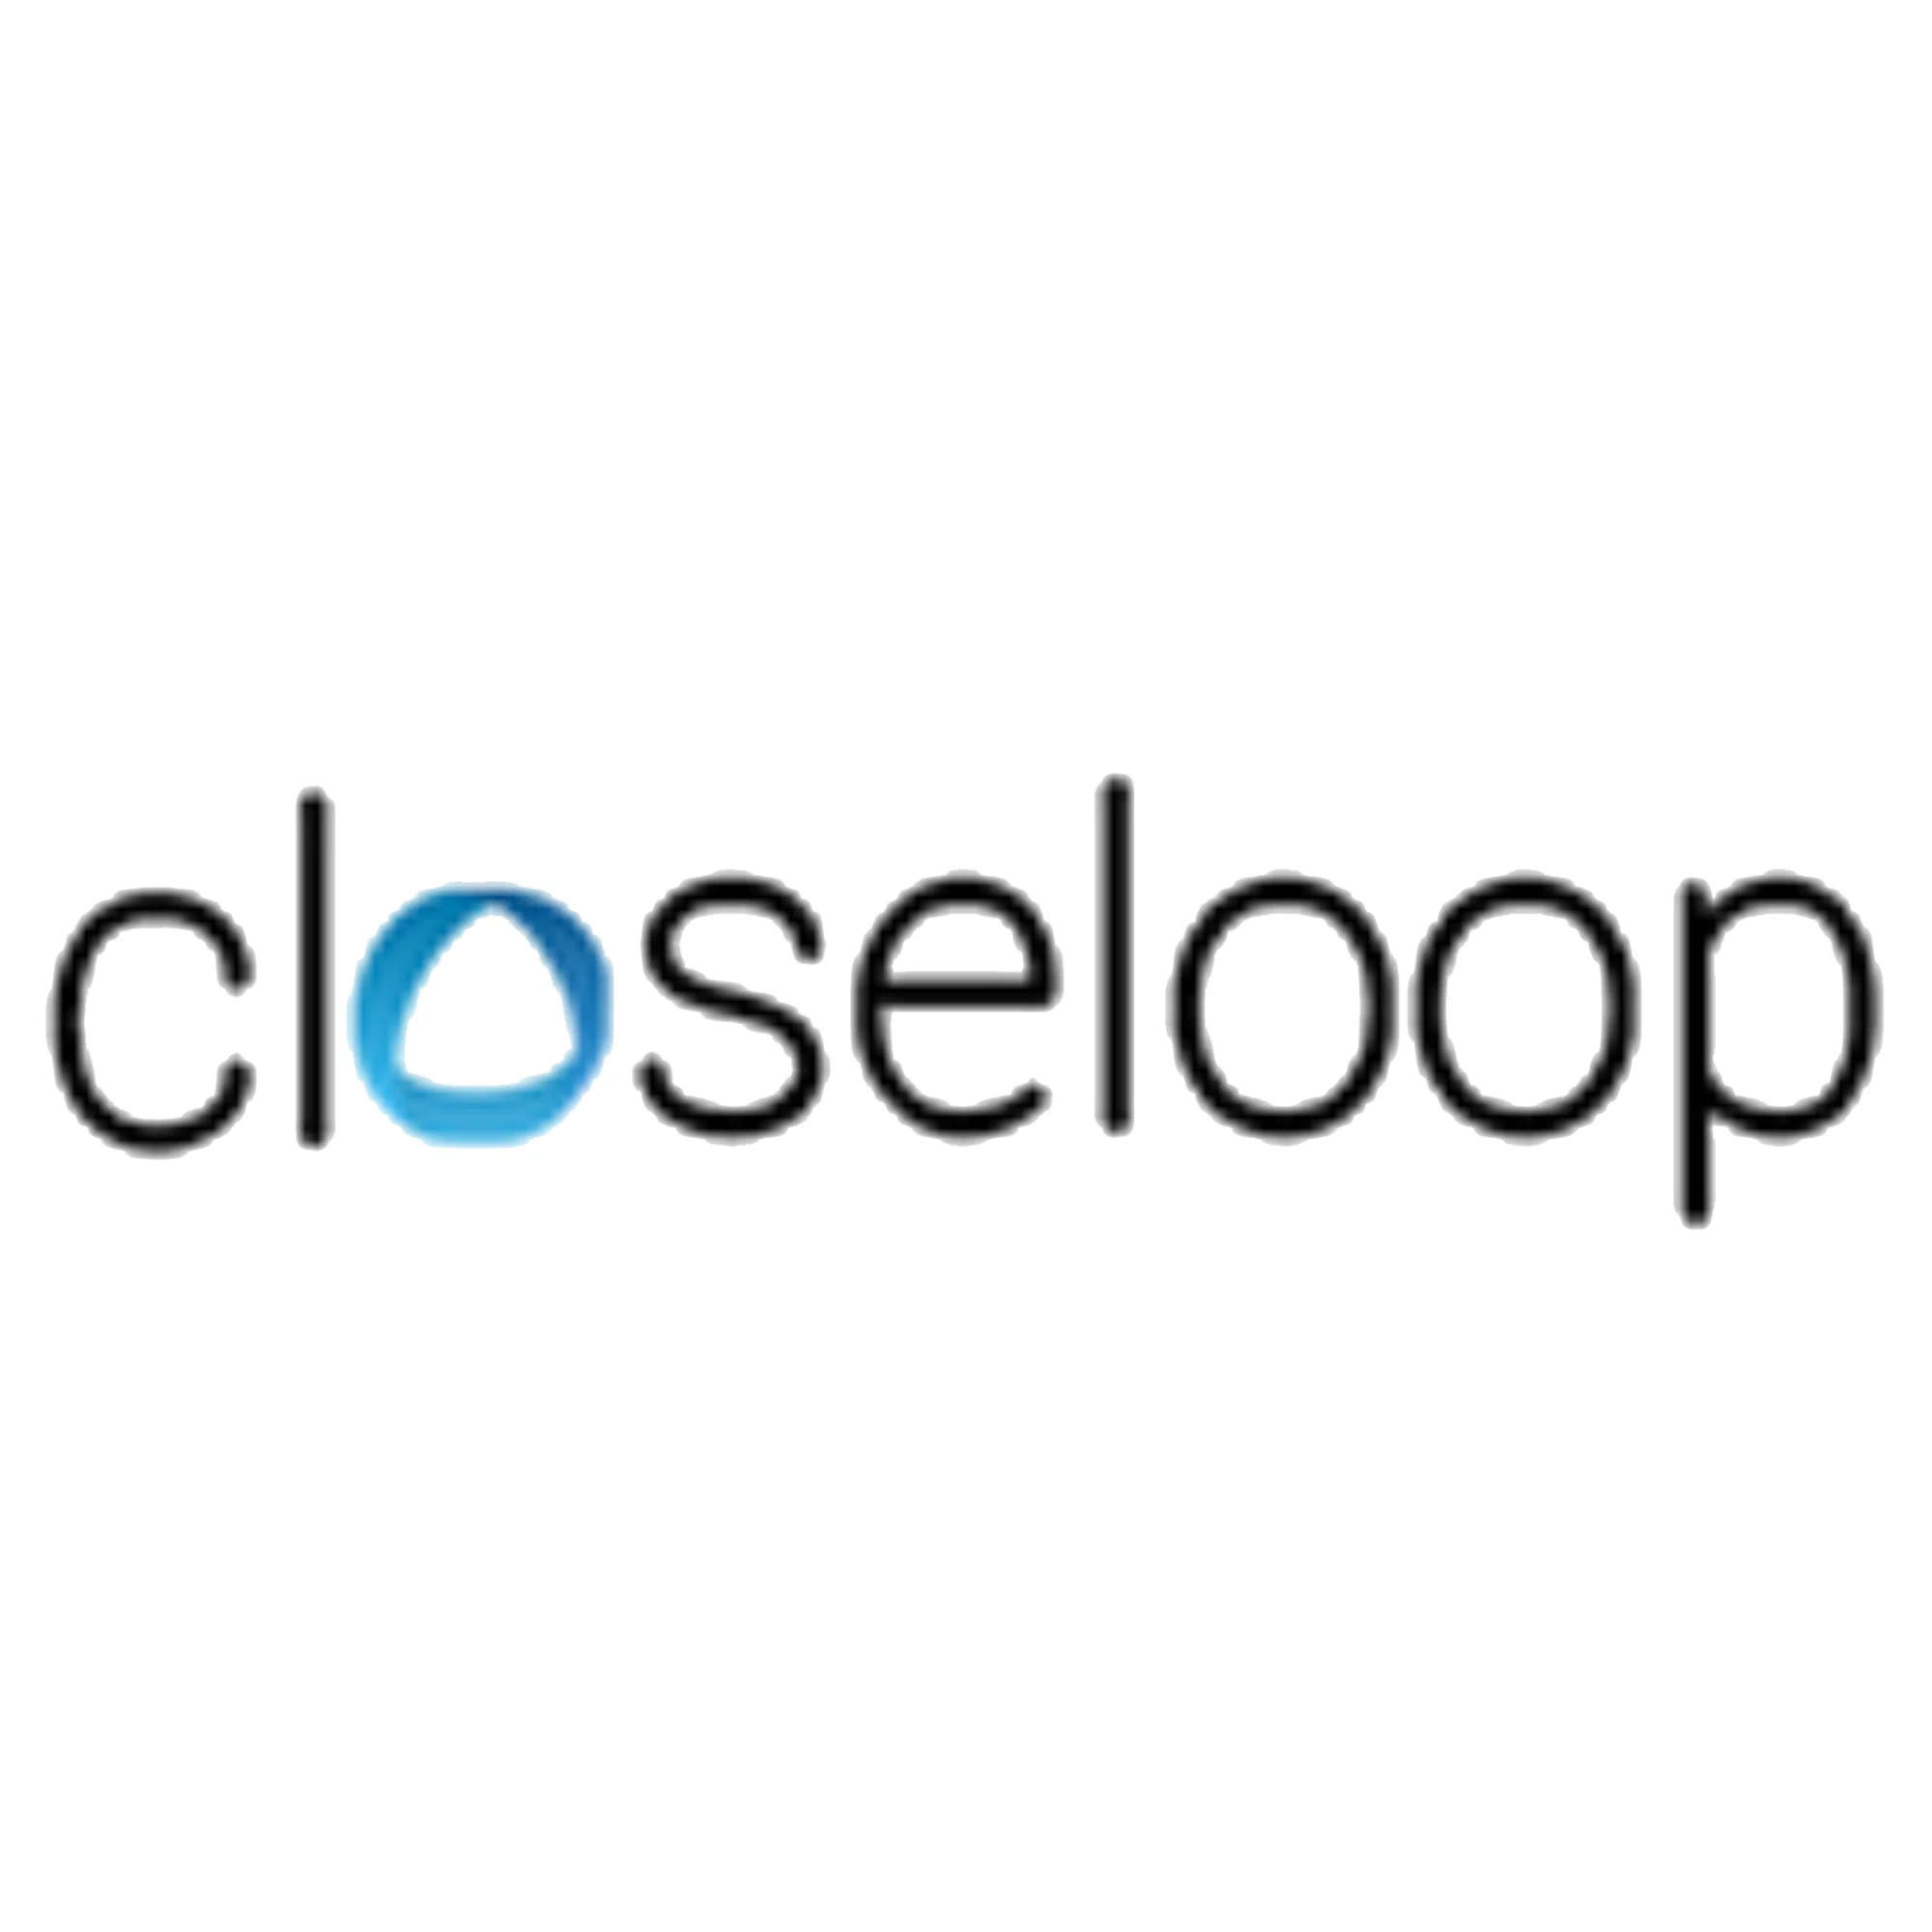 Closeloop